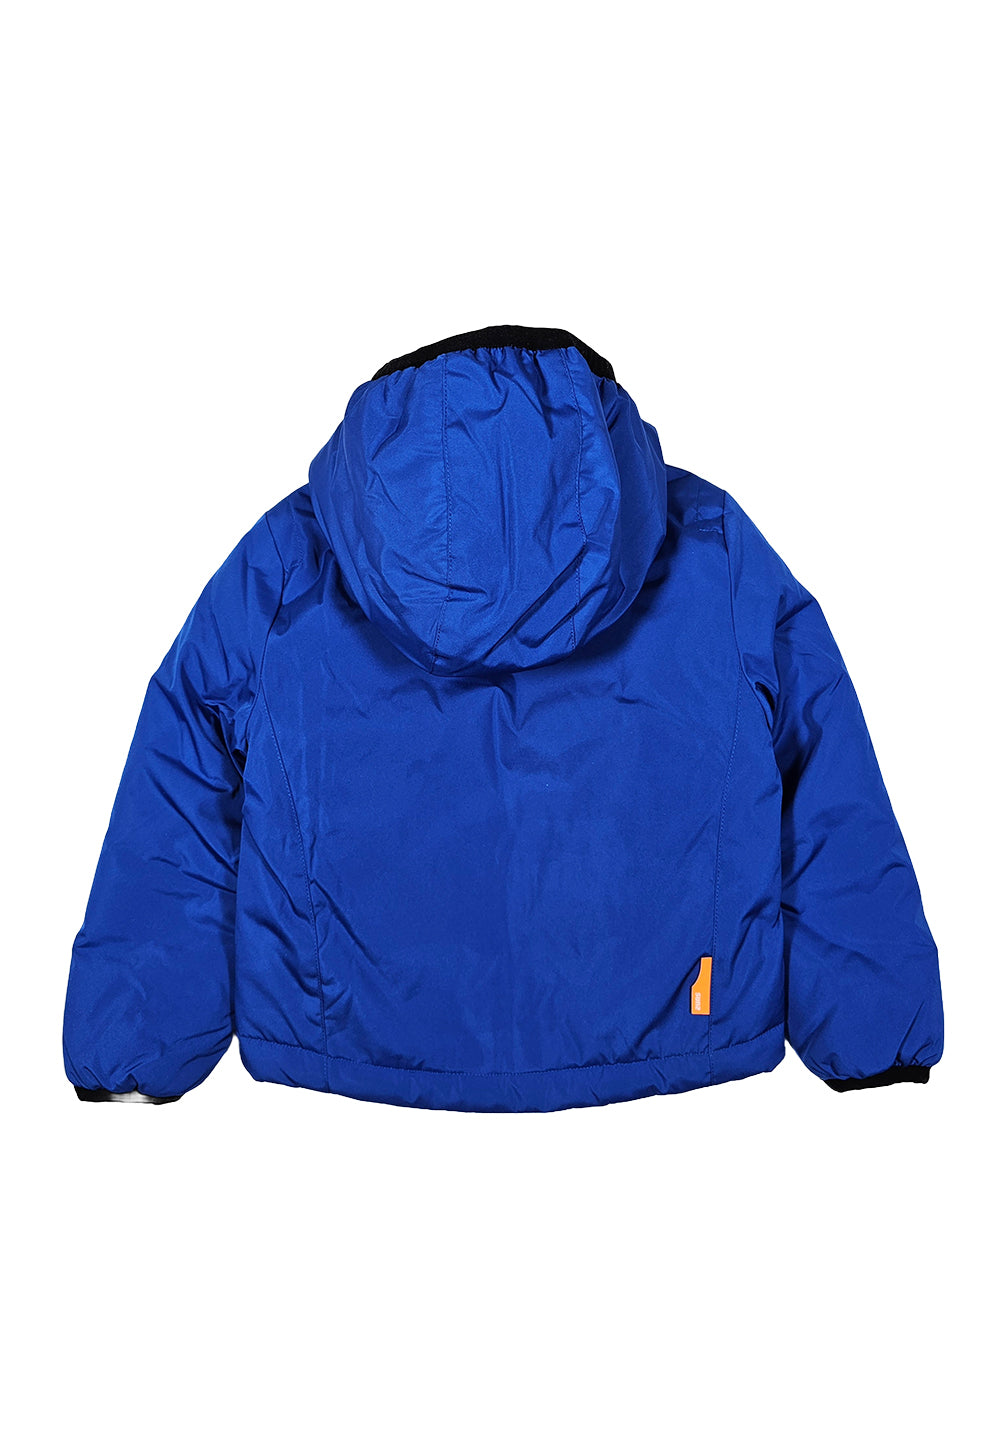 Blue jacket for newborn